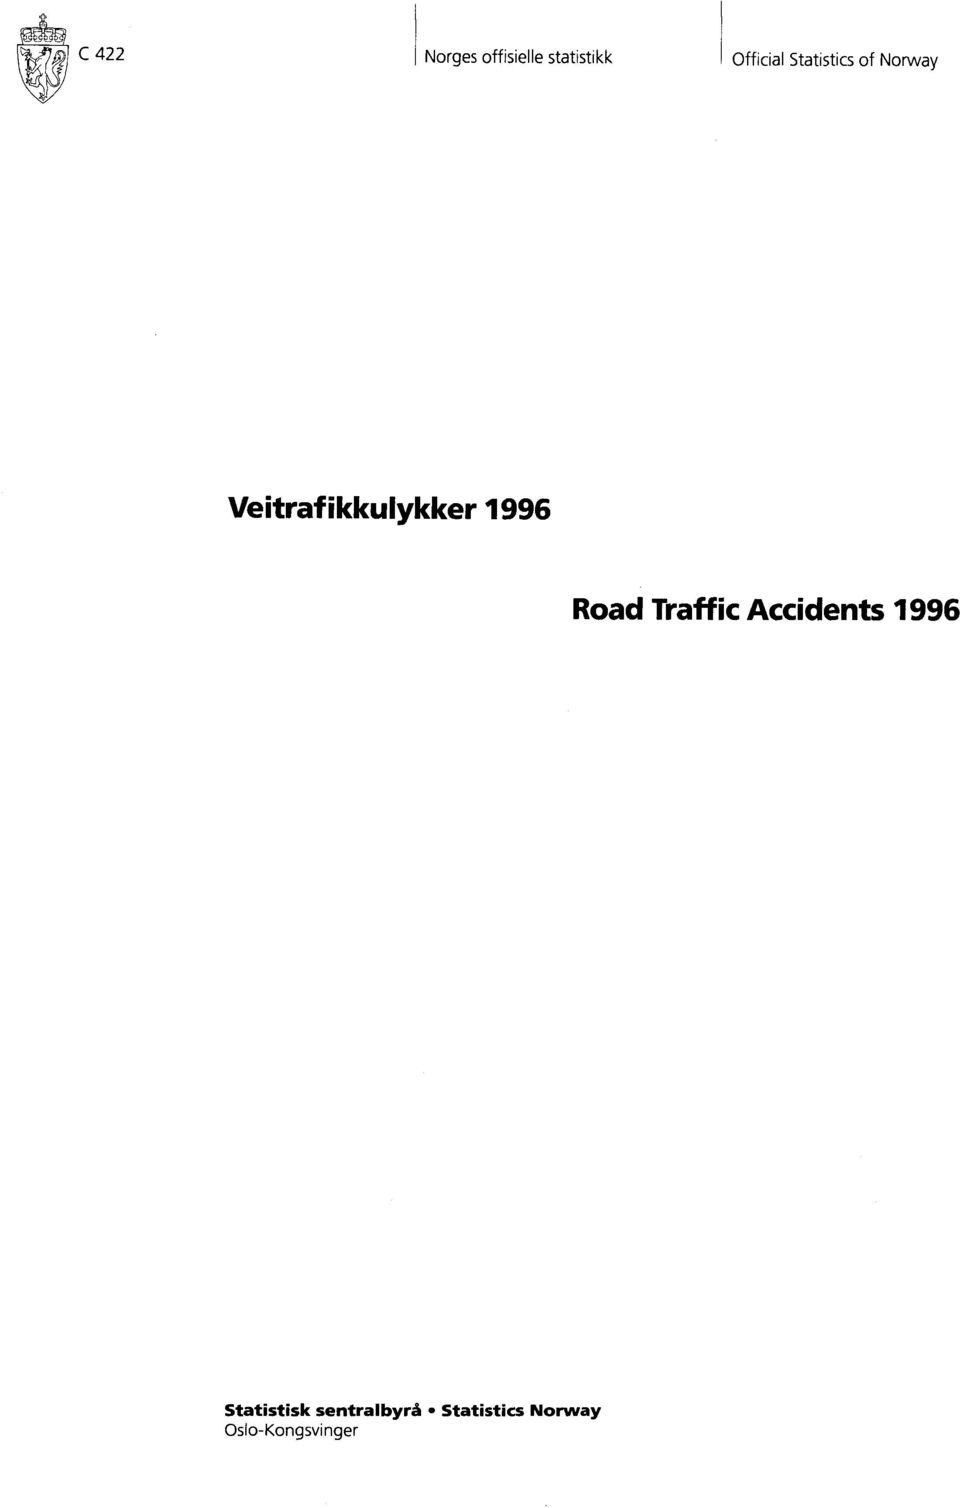 Road Traffic Accidents 1996 Statistisk